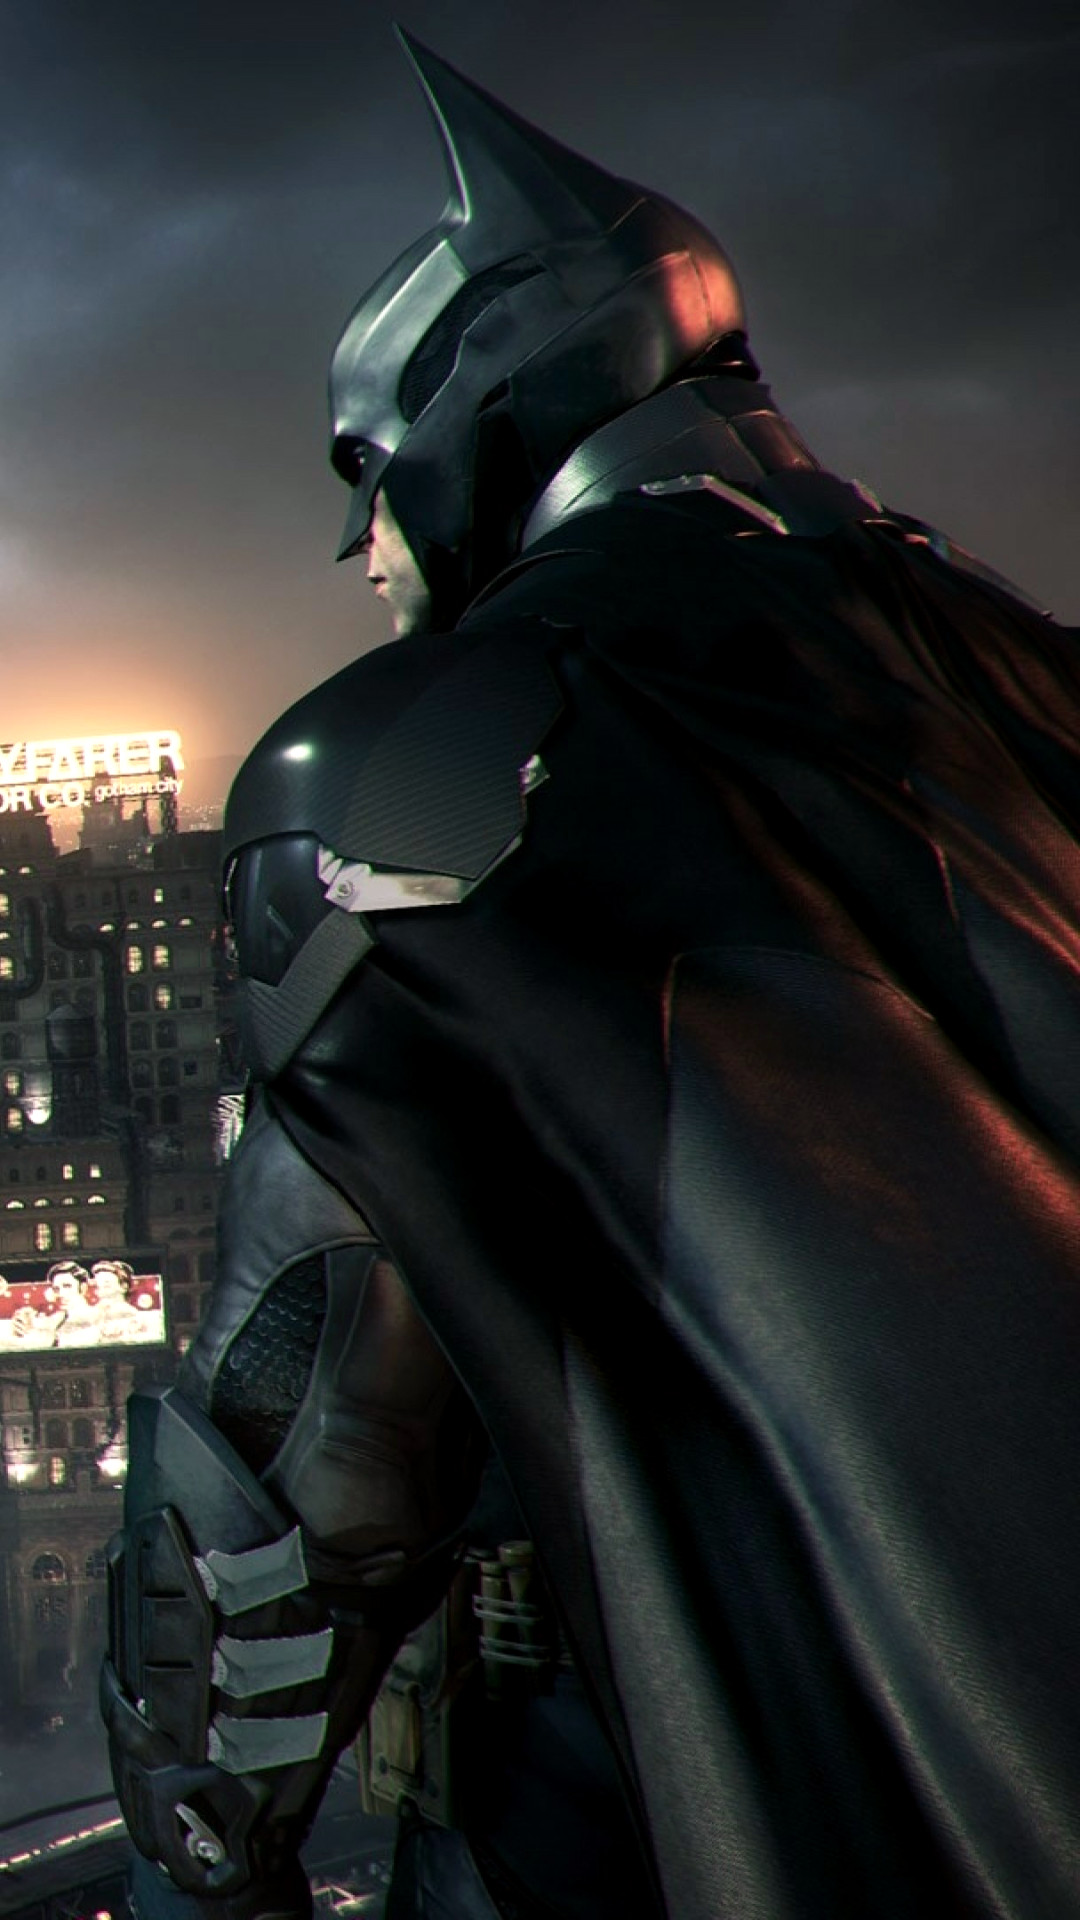 Best Batman iPhone Wallpaper Free Download Arkham Knight iPhone Wallpaper HD